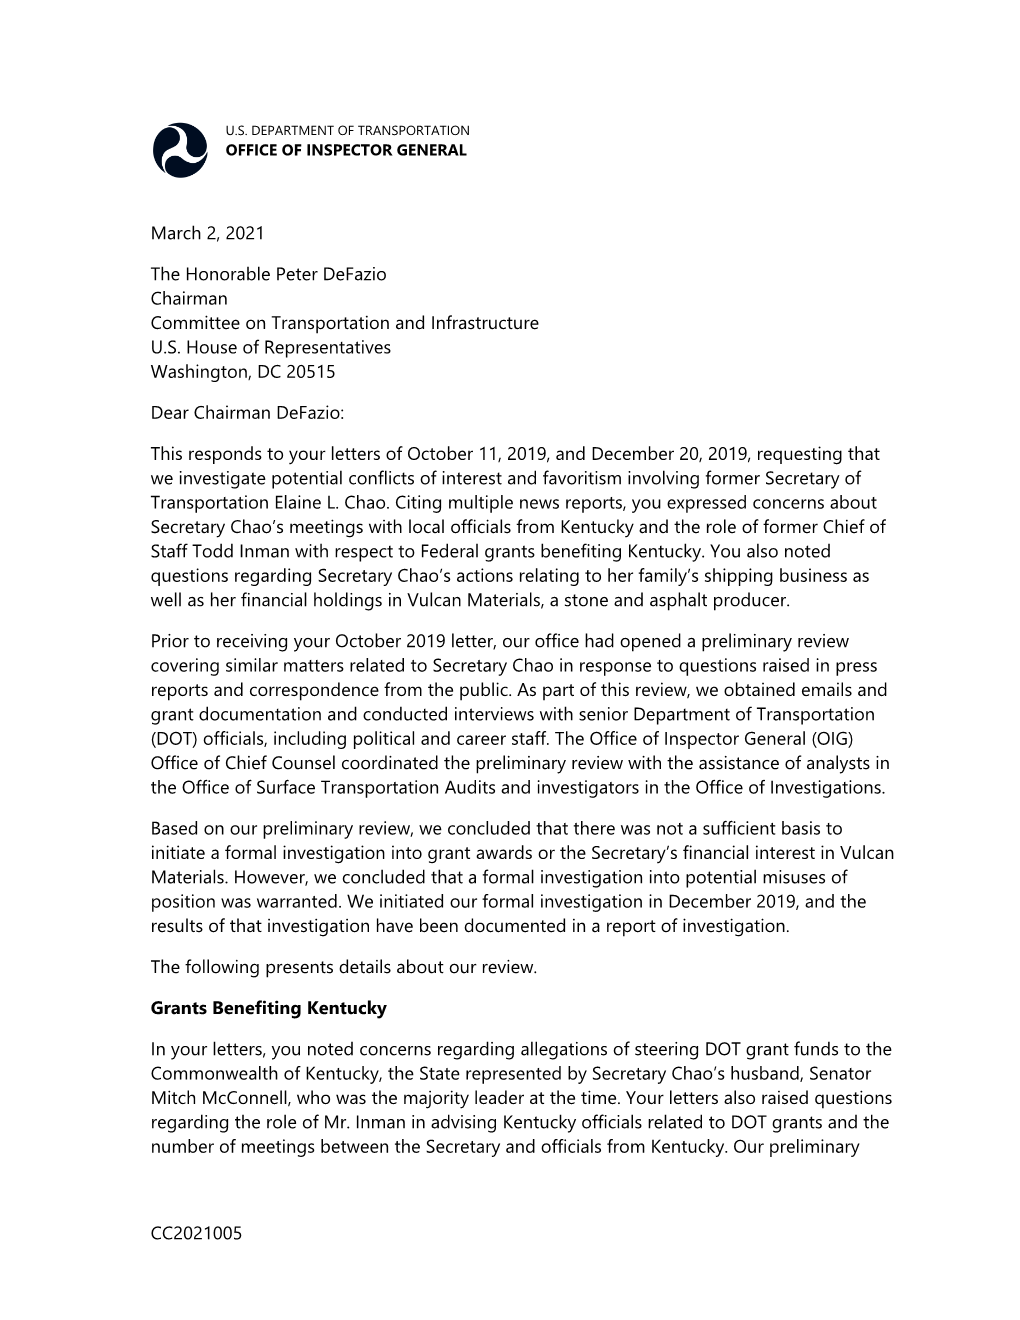 DOT OIG Letter to Chairman Peter Defazio 2021-03-02.Pdf